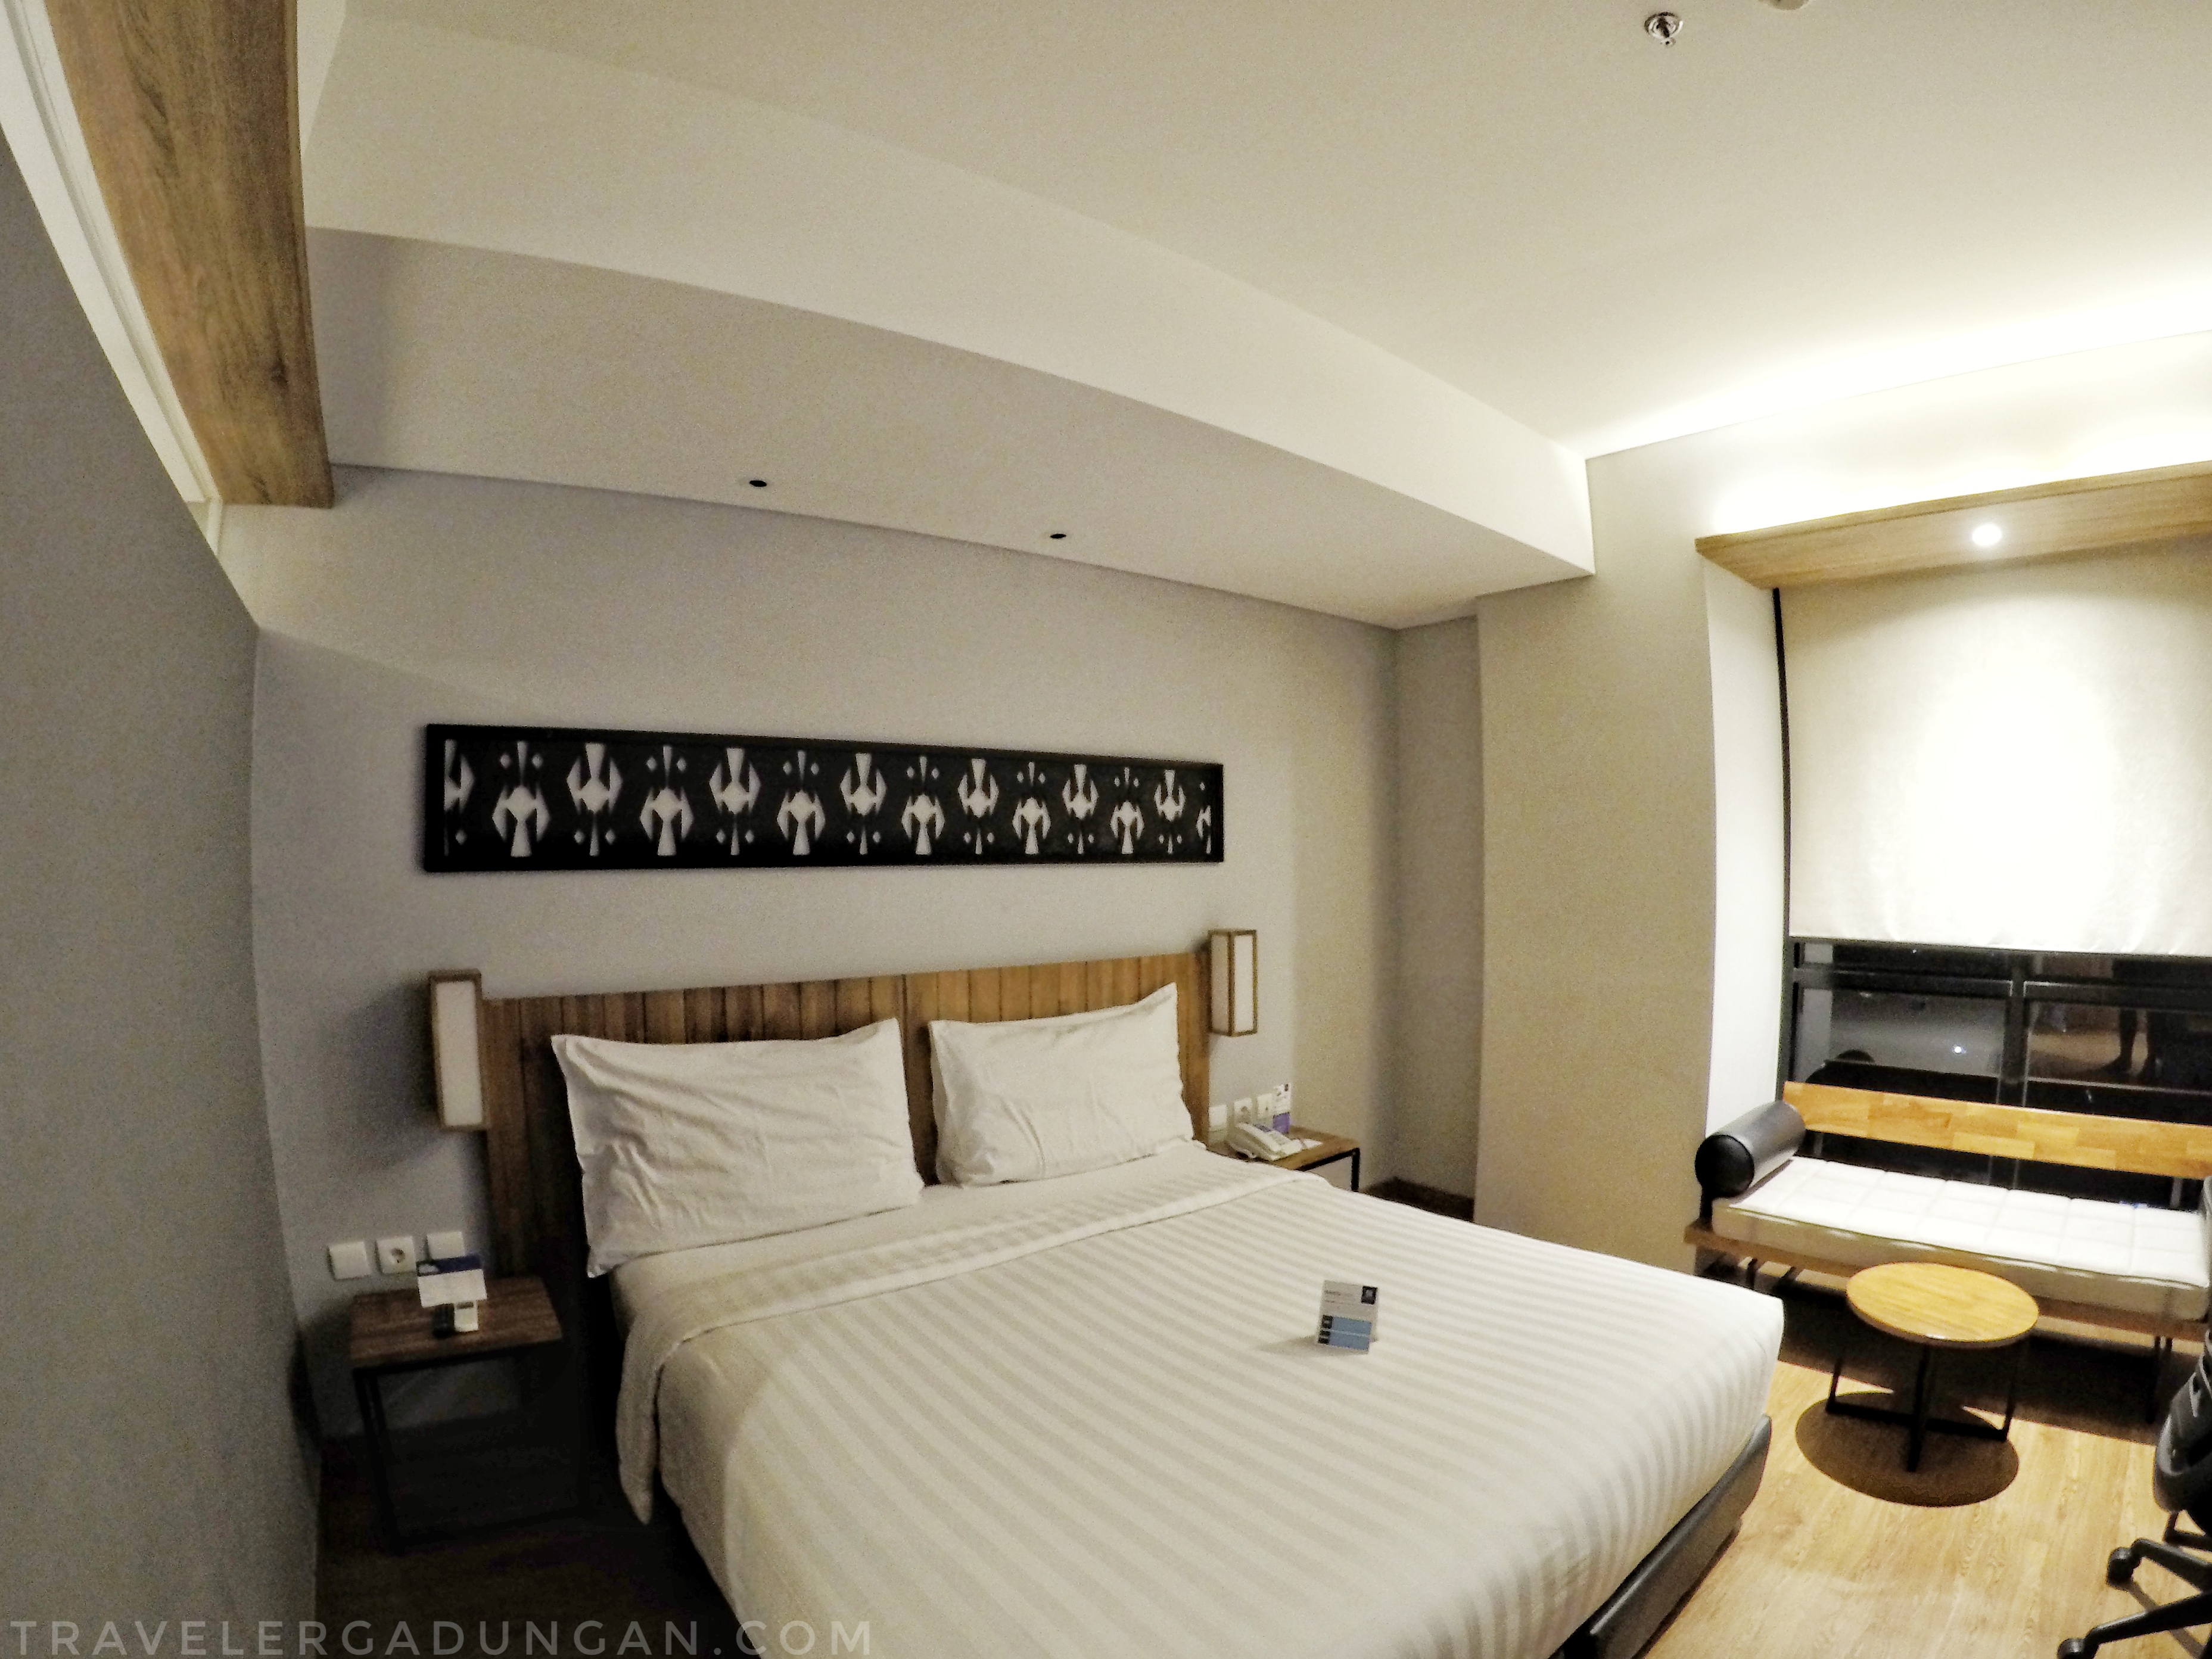 Great Sale 30 Menginap Di Hotel Batiqa Lampung Travelergadungan